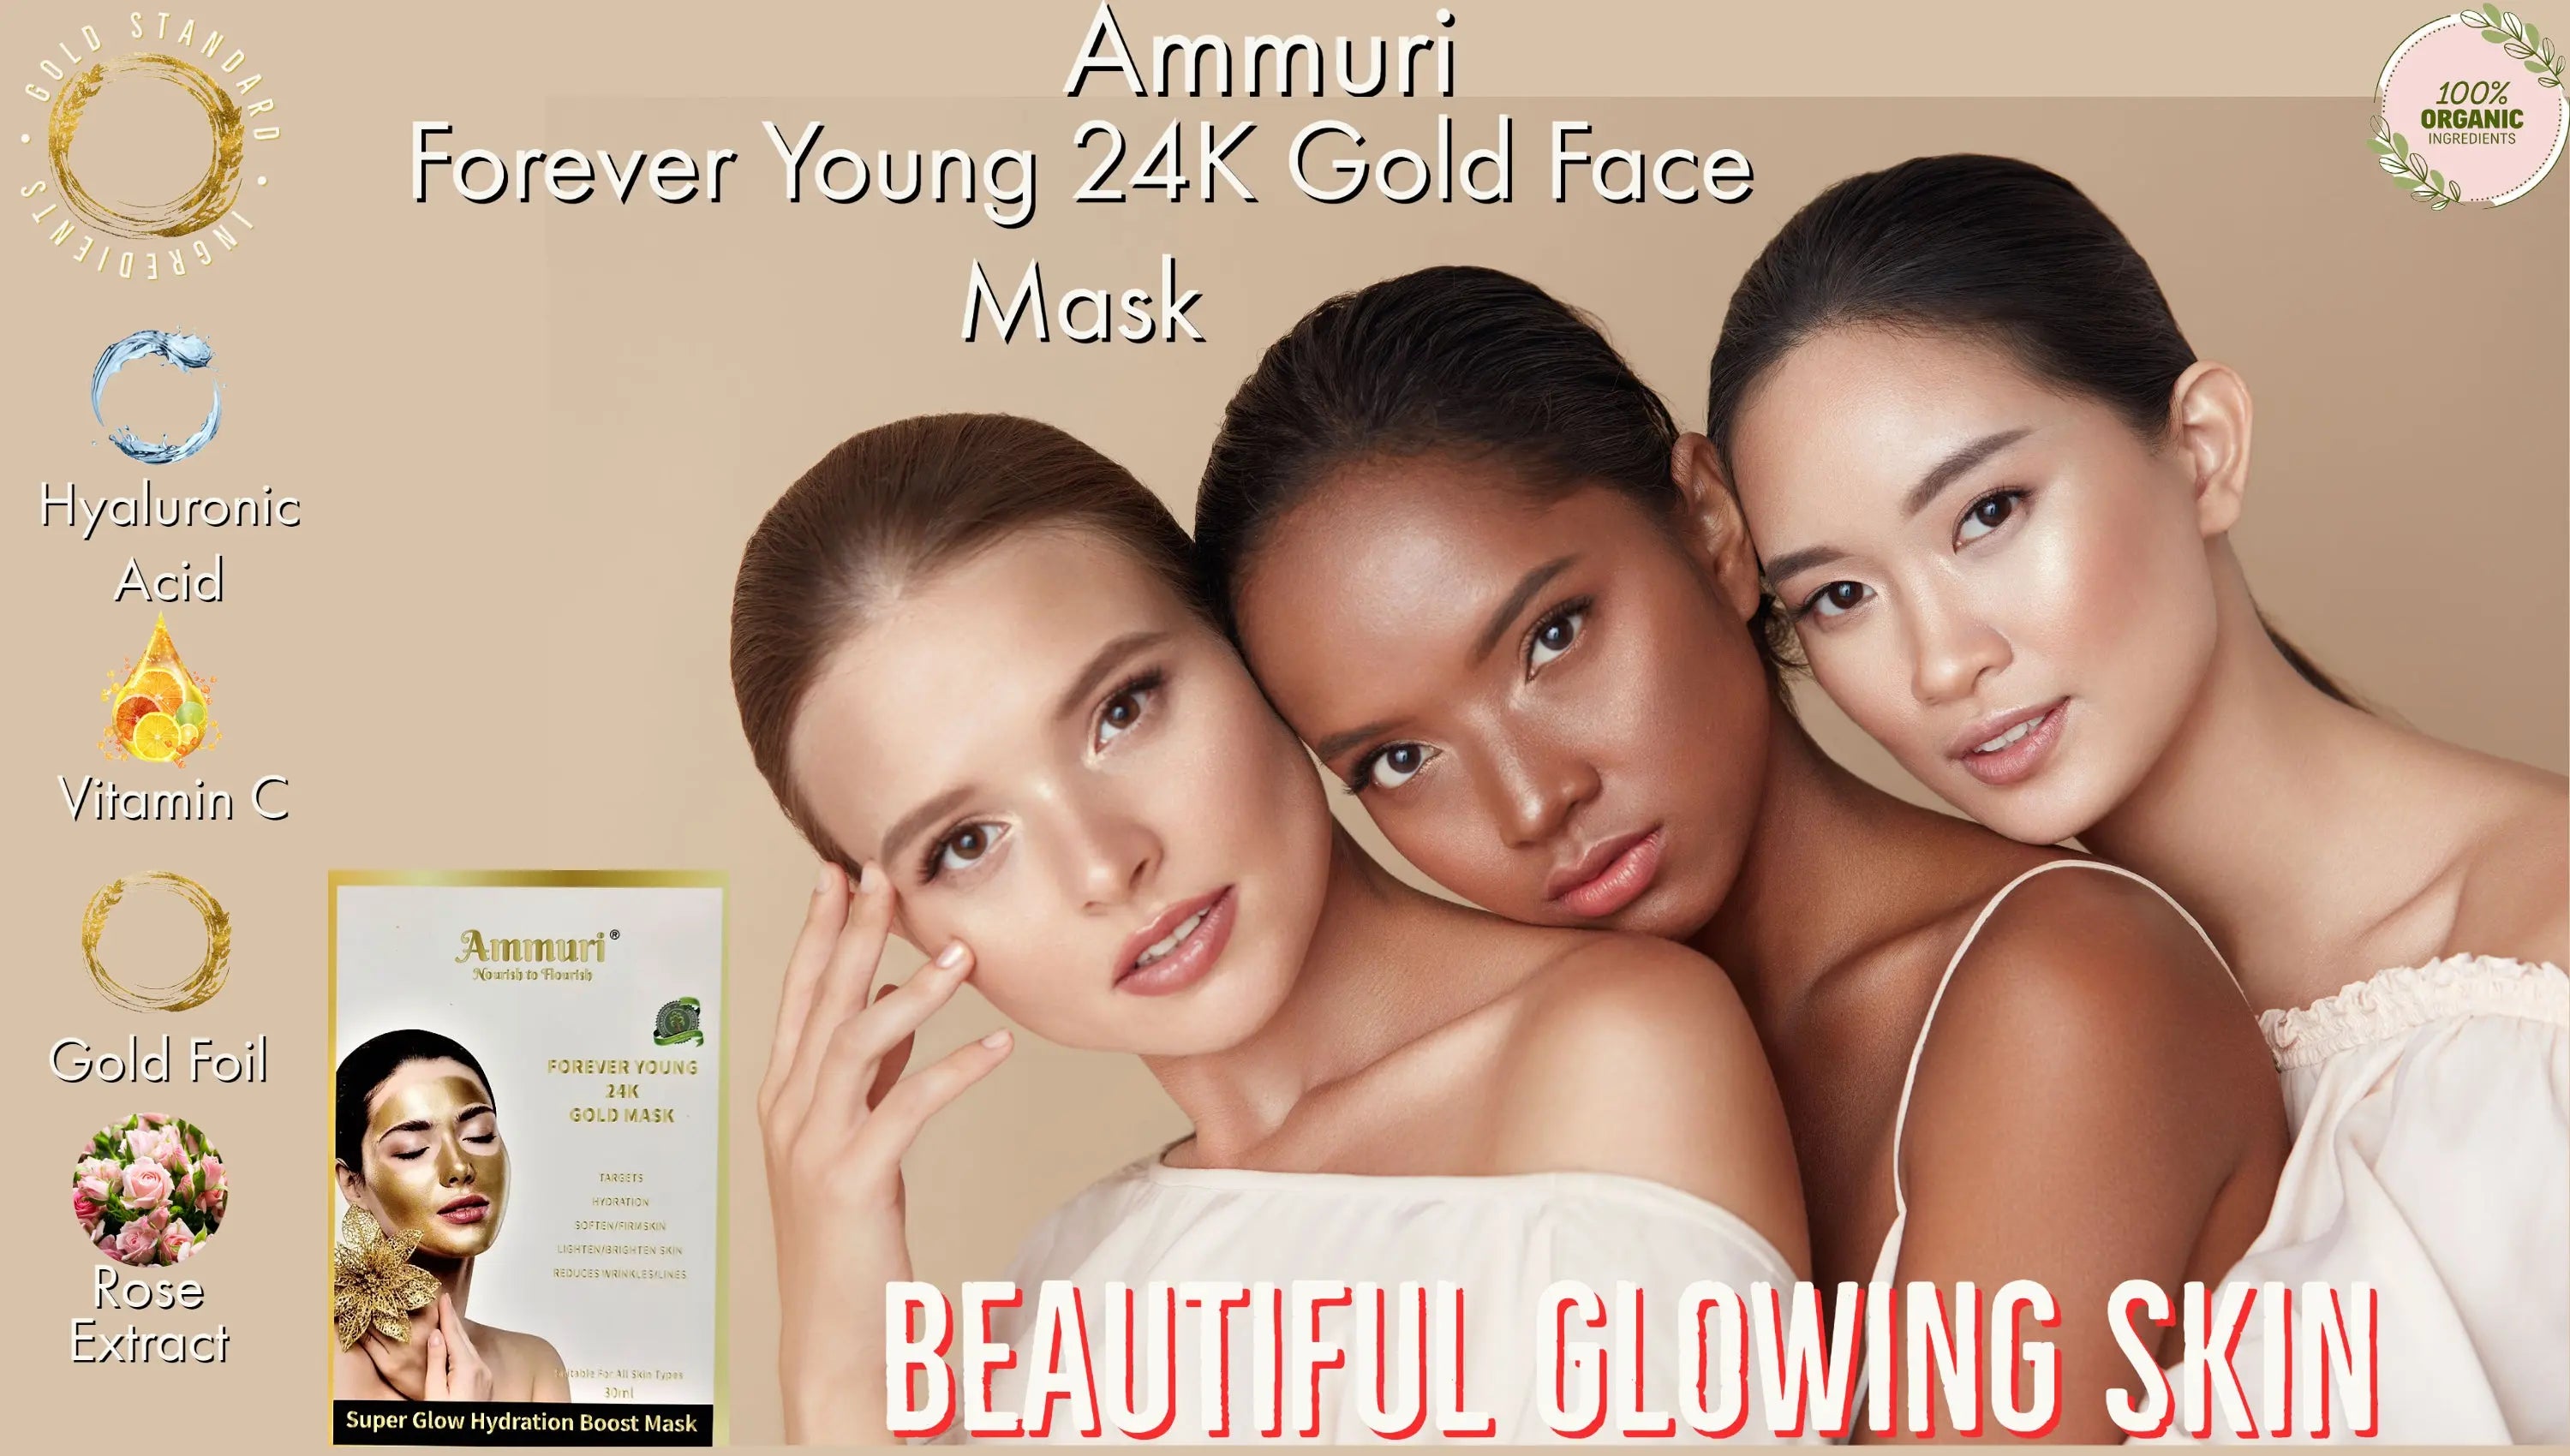 Ammuri 24k Gold Silk Mask Sheet for Skin Bright & Super Glow Hydration Boost Anti Age Anti Wrinkle Ammuri Skincare